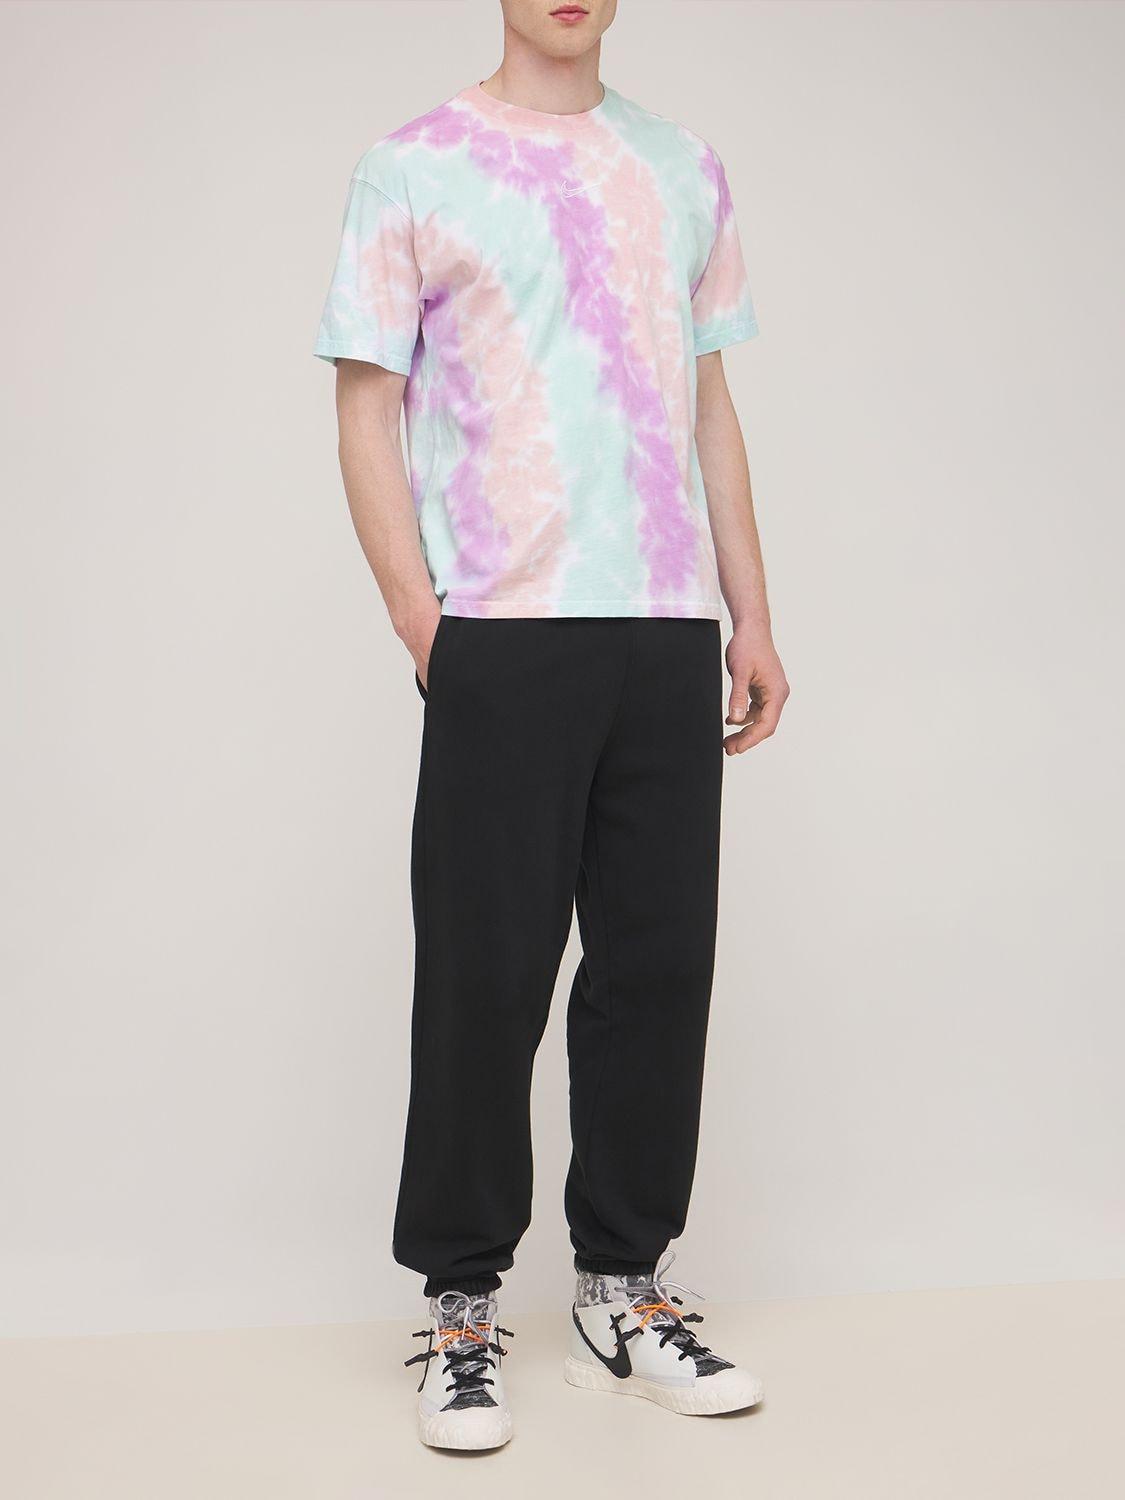 Nike Air Max 90 Wild Tie Dye T-shirt for Men | Lyst